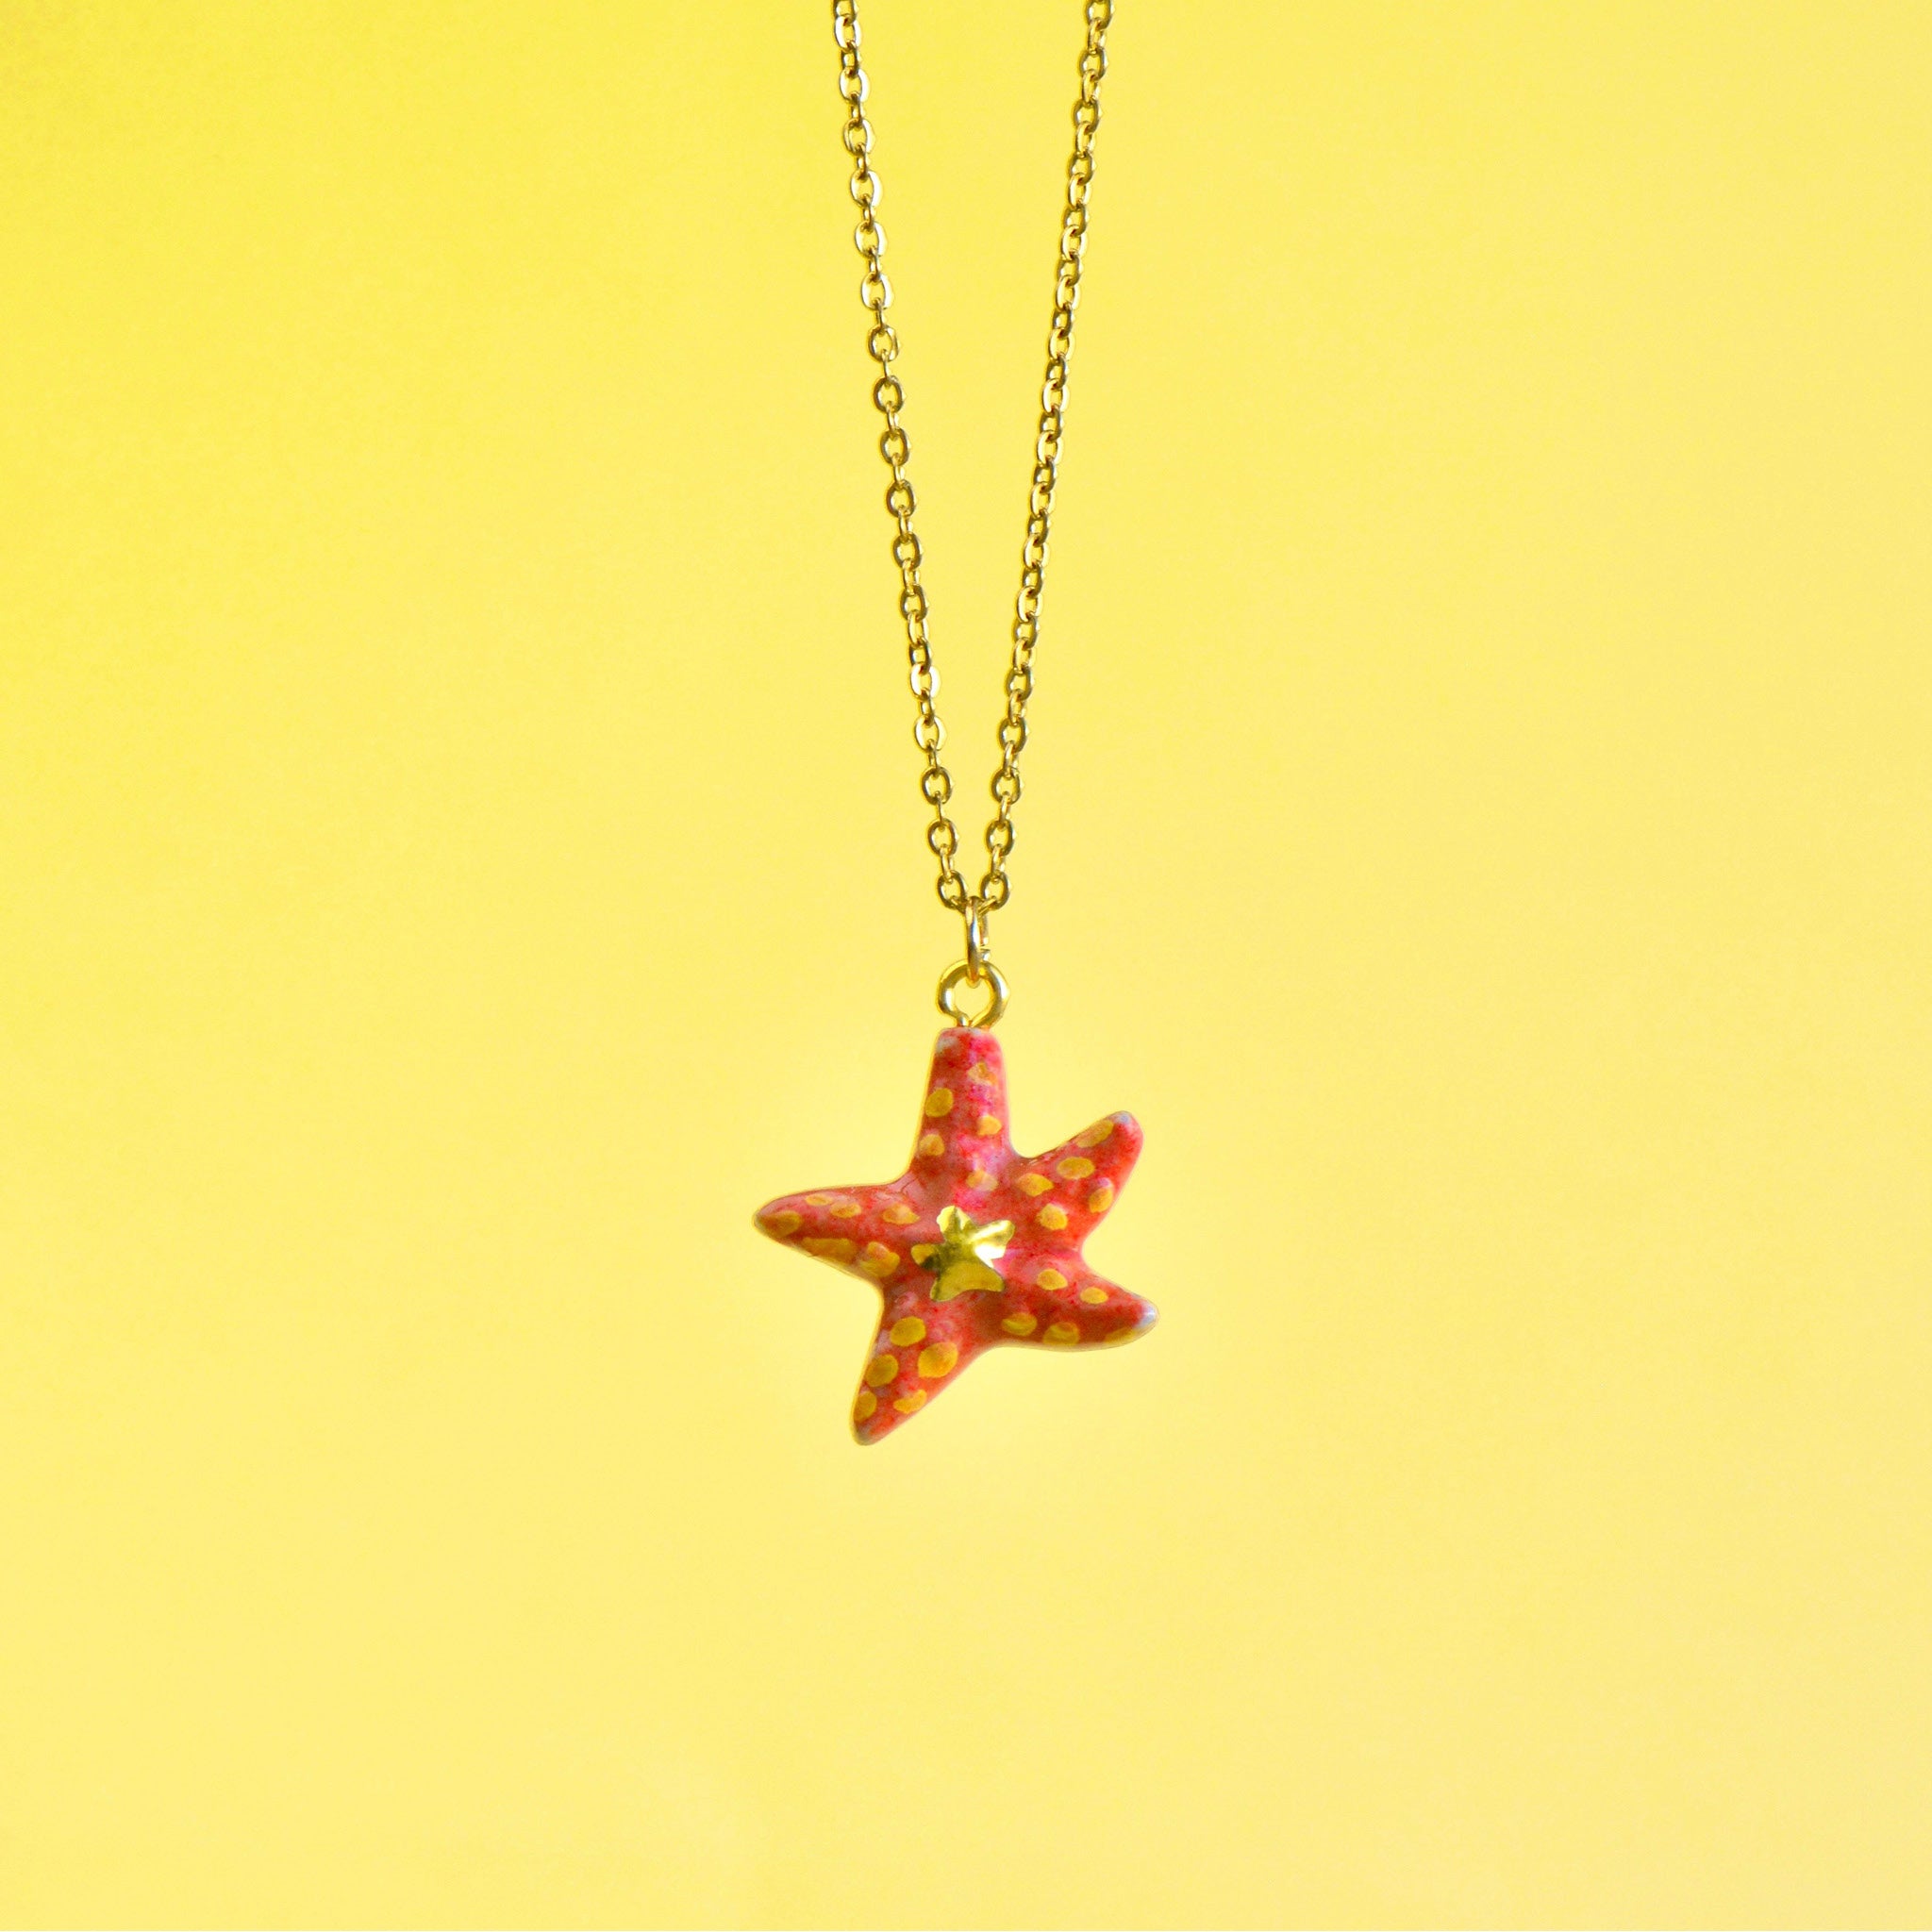 Starfish Necklace | Camp Hollow Ceramic Animal Jewelry